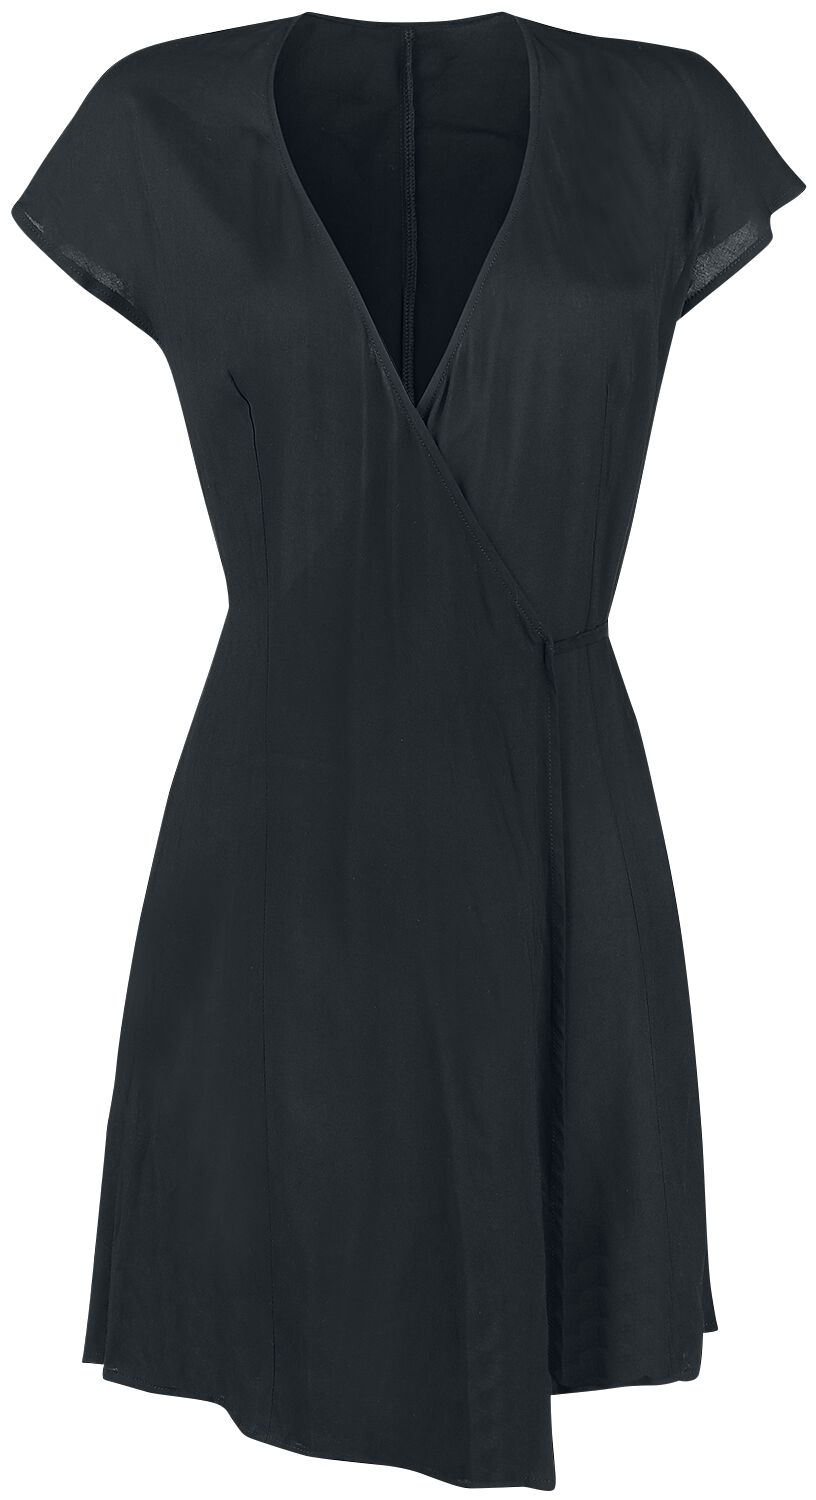 Forplay - Wickelkleid mit Bindegürtel - Kleid knielang - schwarz